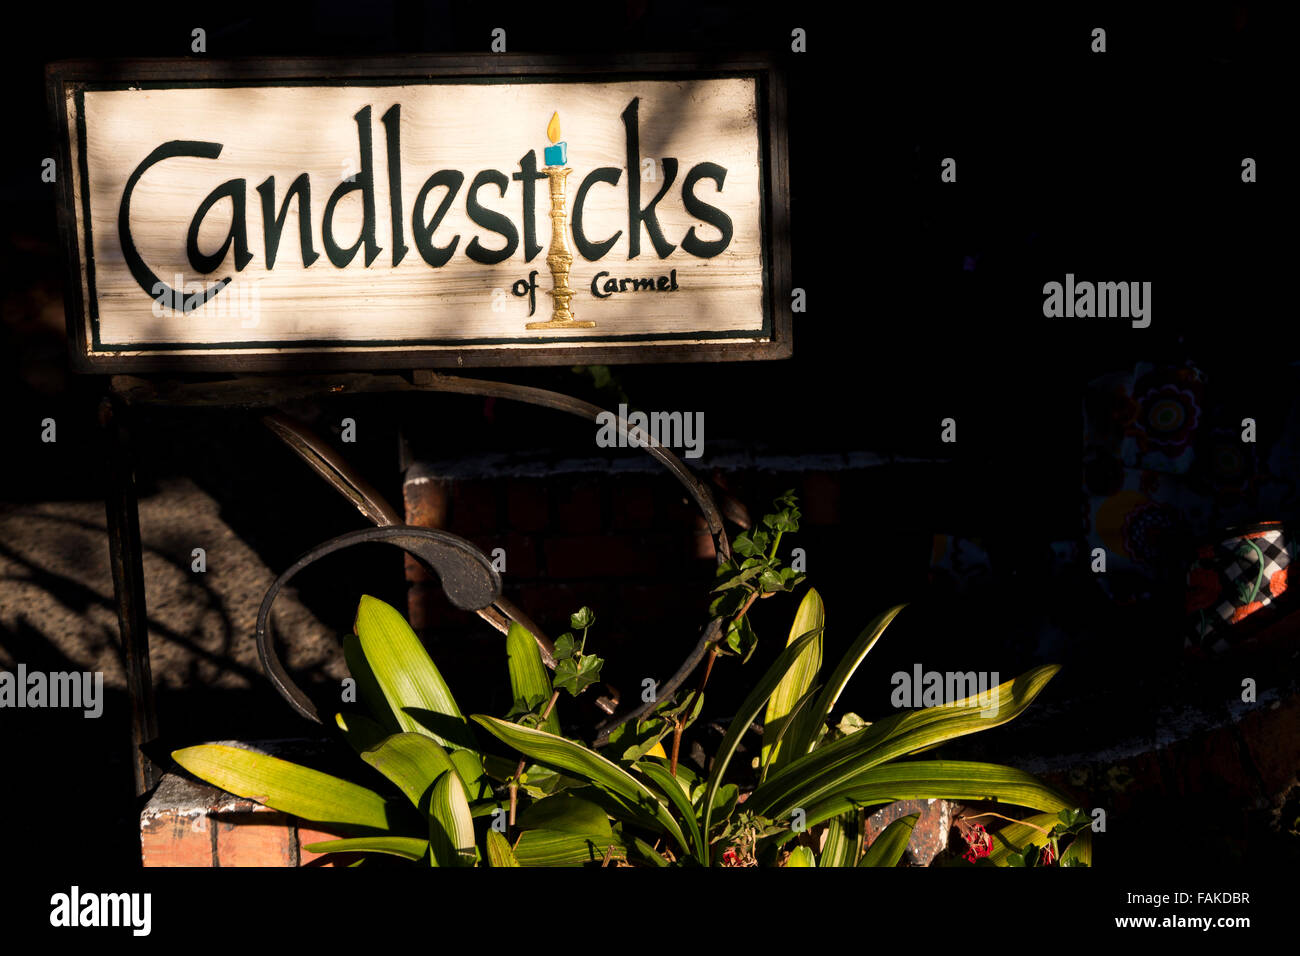 Candlesticks of Carmel, in Carmel, California Stock Photo